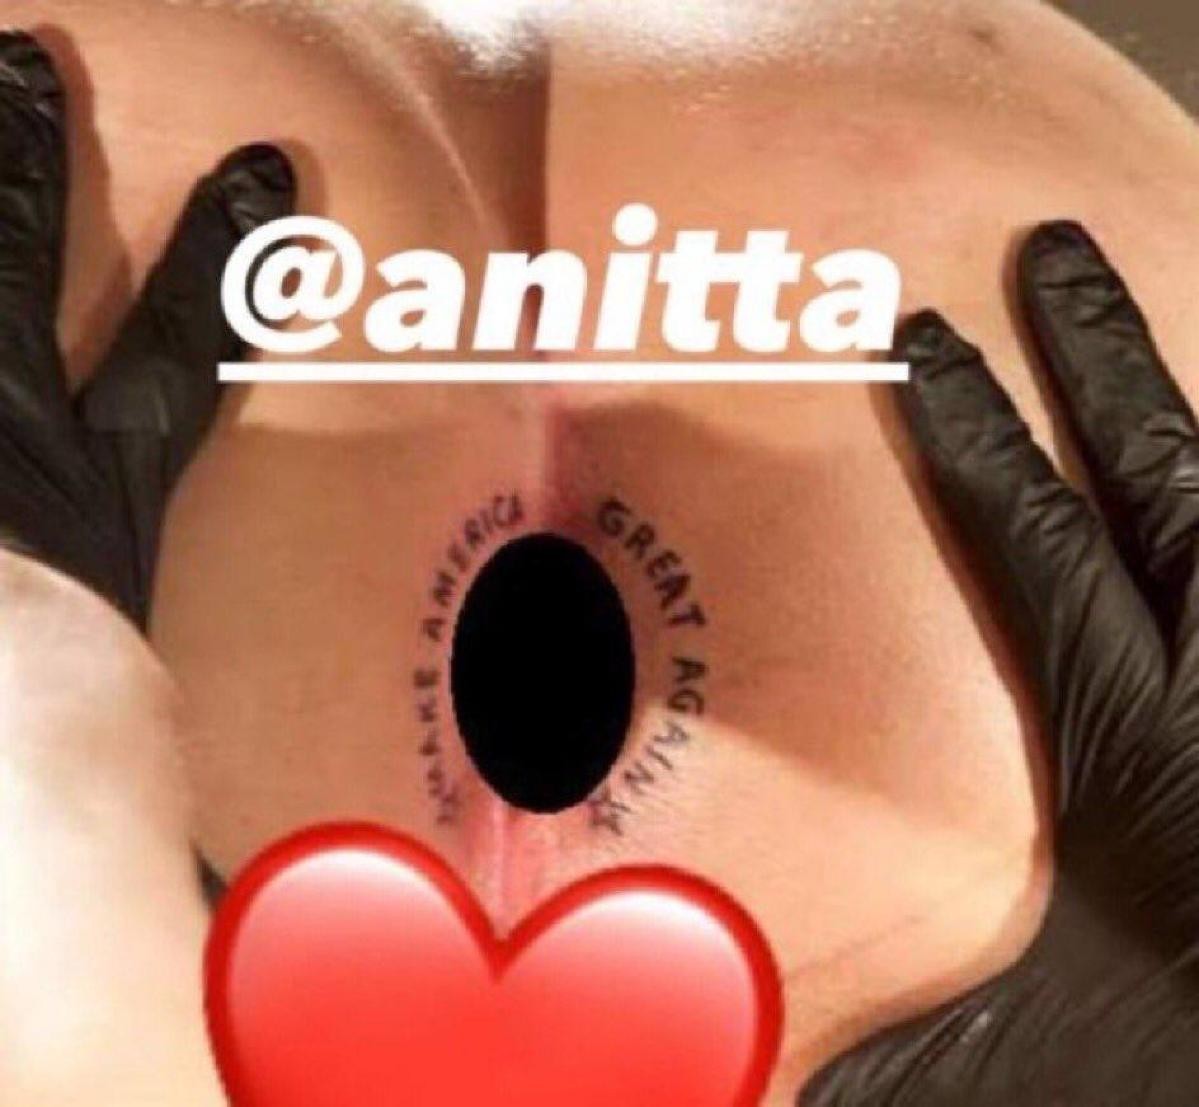 Anita tatuagem no cu